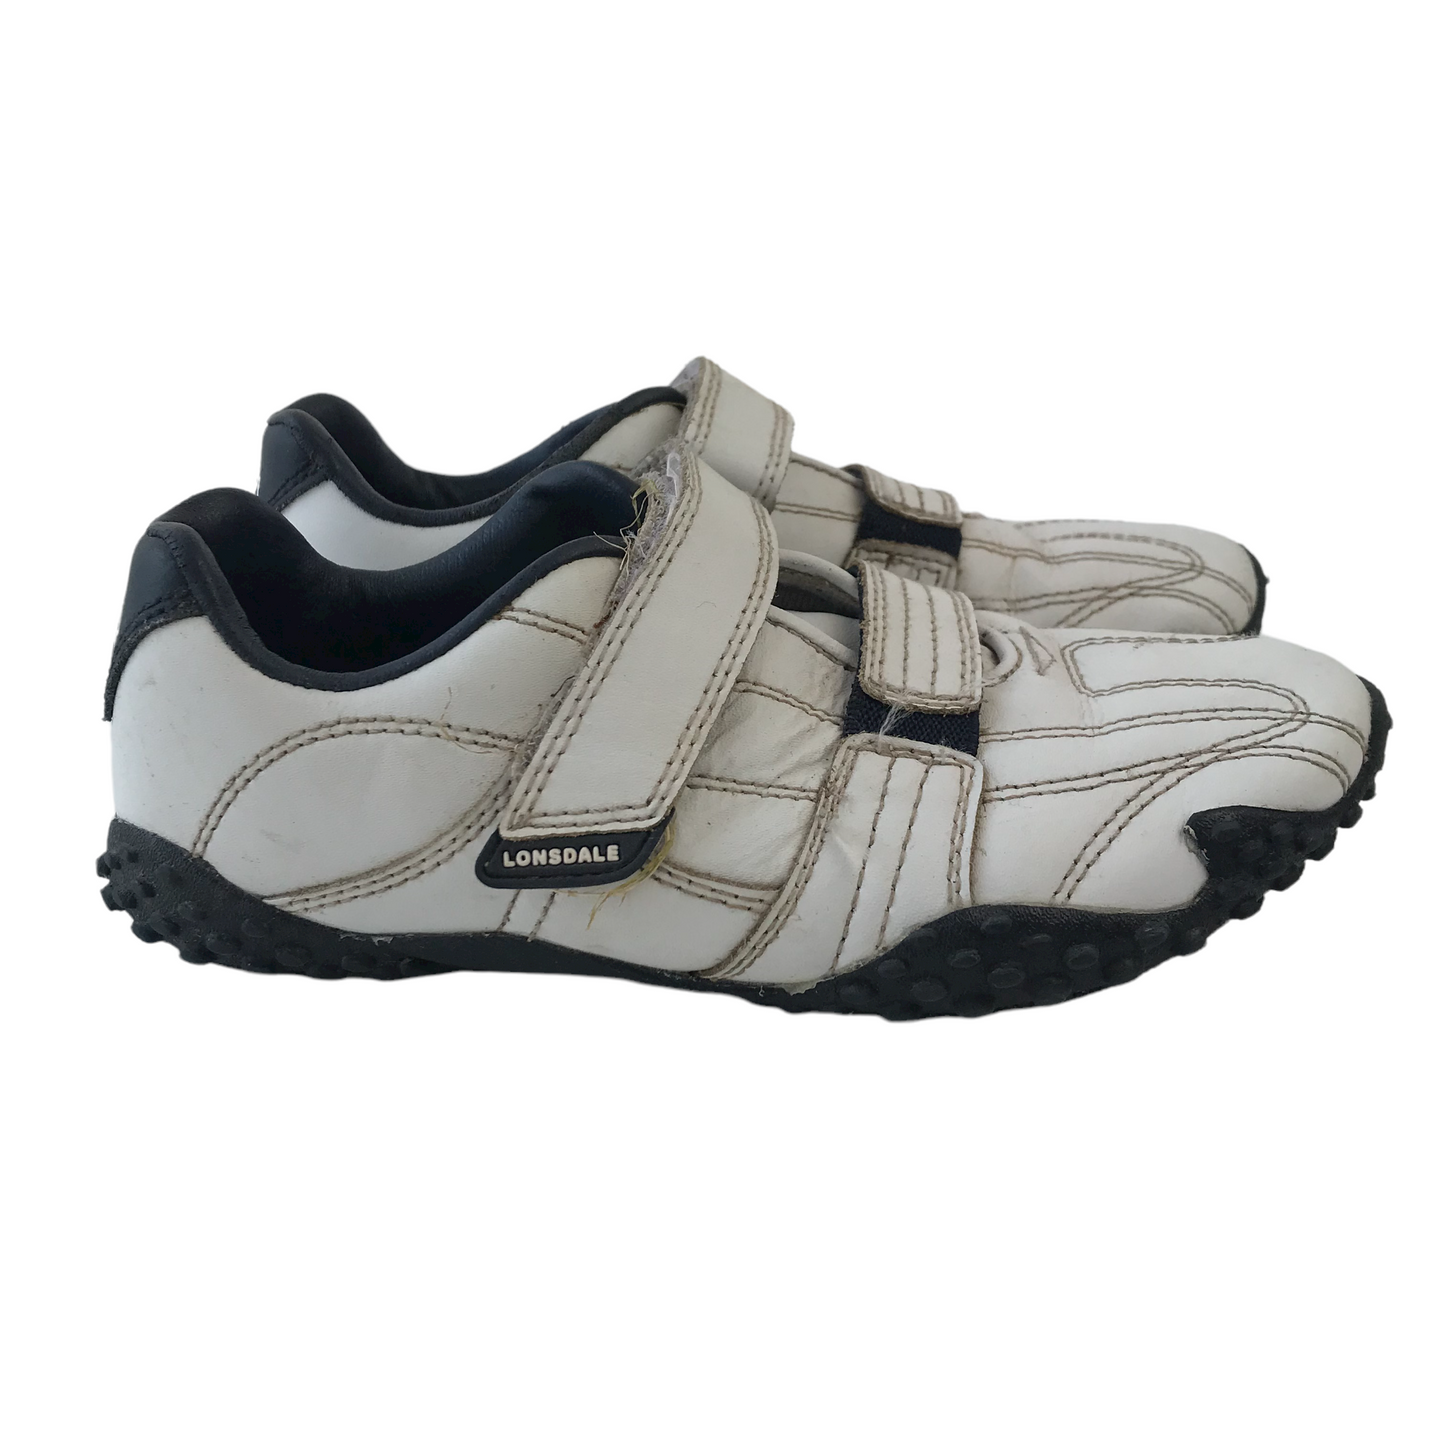 Lonsdale White Trainers Shoe Size 13 (jr)